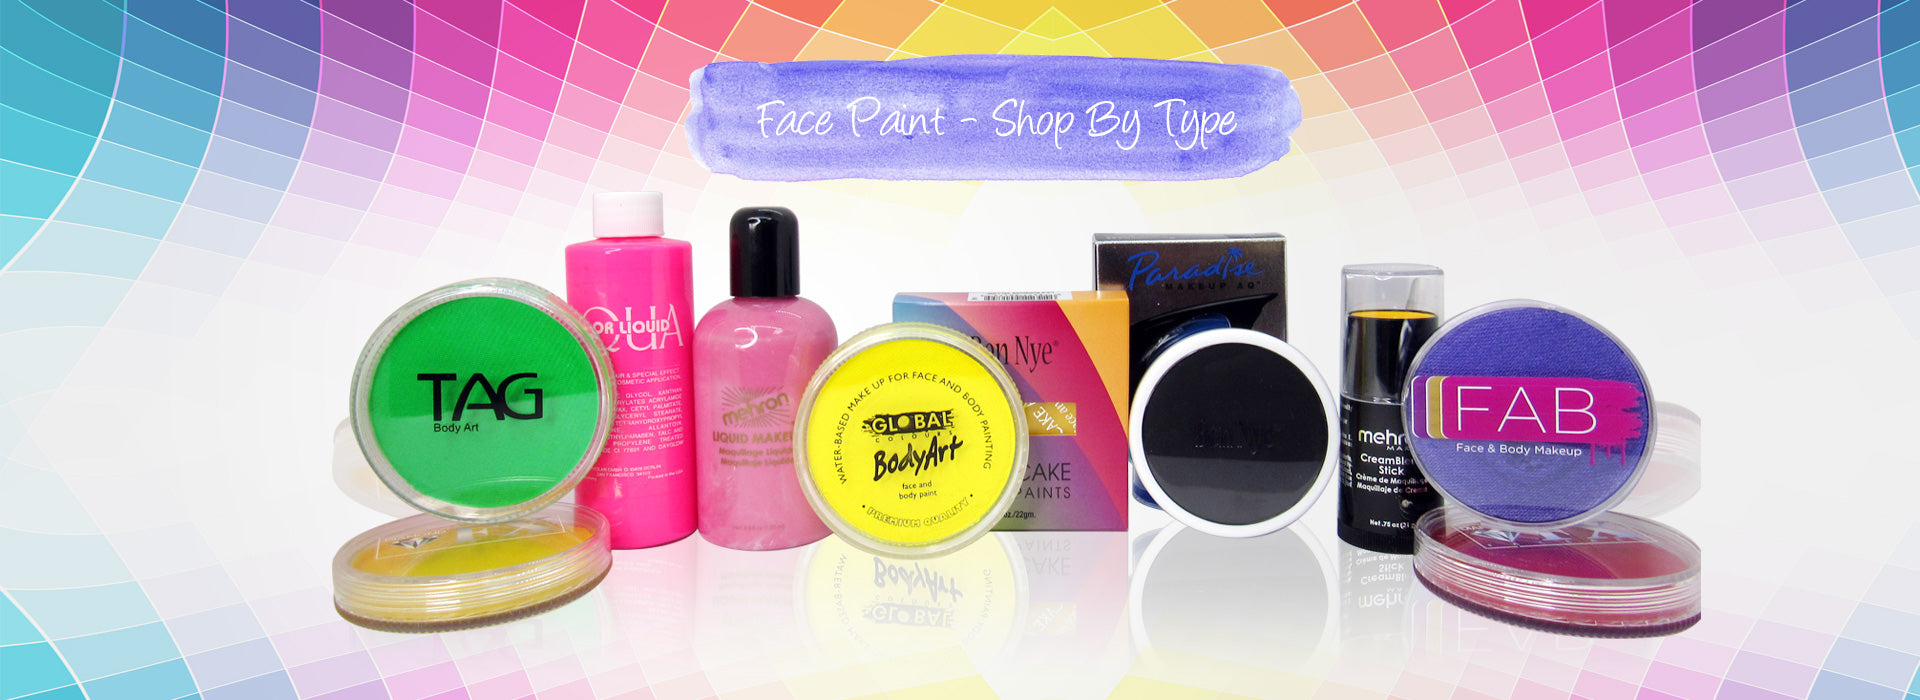 Face Paint- Shop by Type